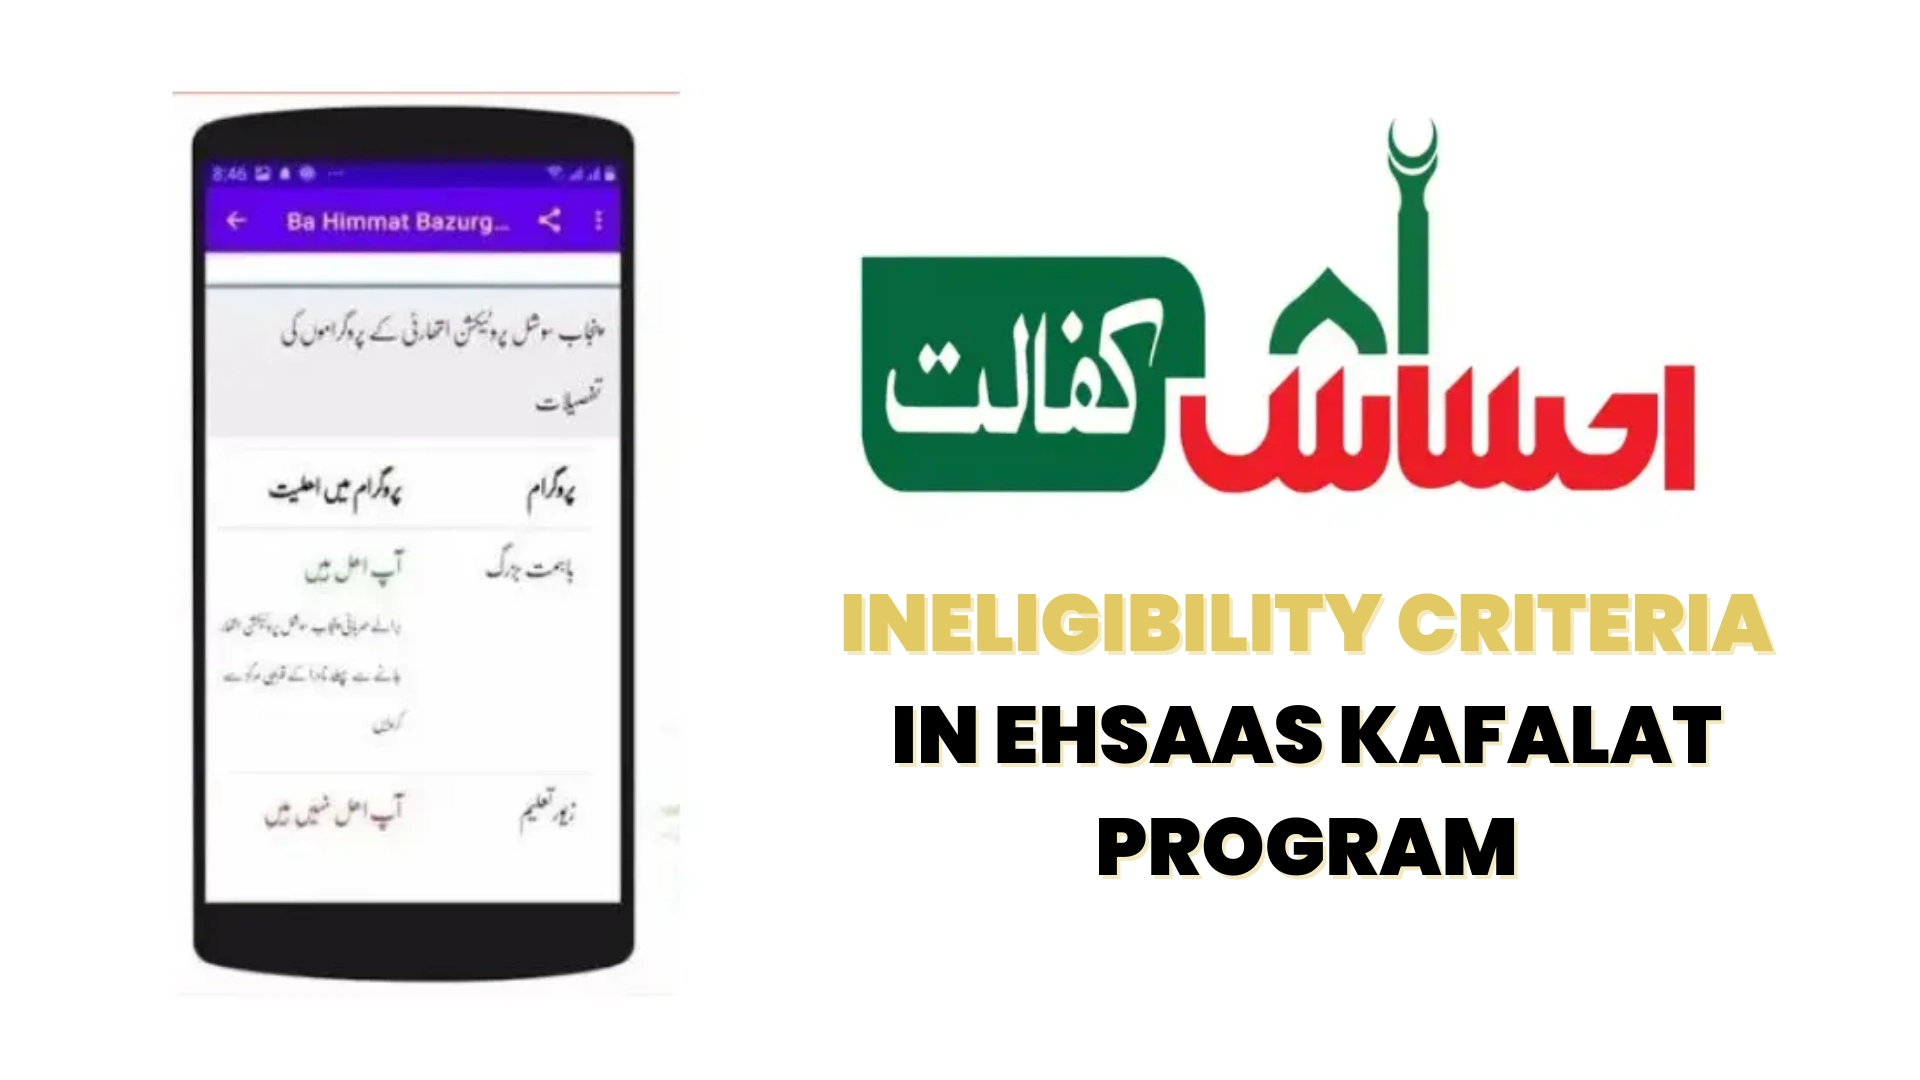 Ineligibility Criteria in Ehsaas Kafalat Program